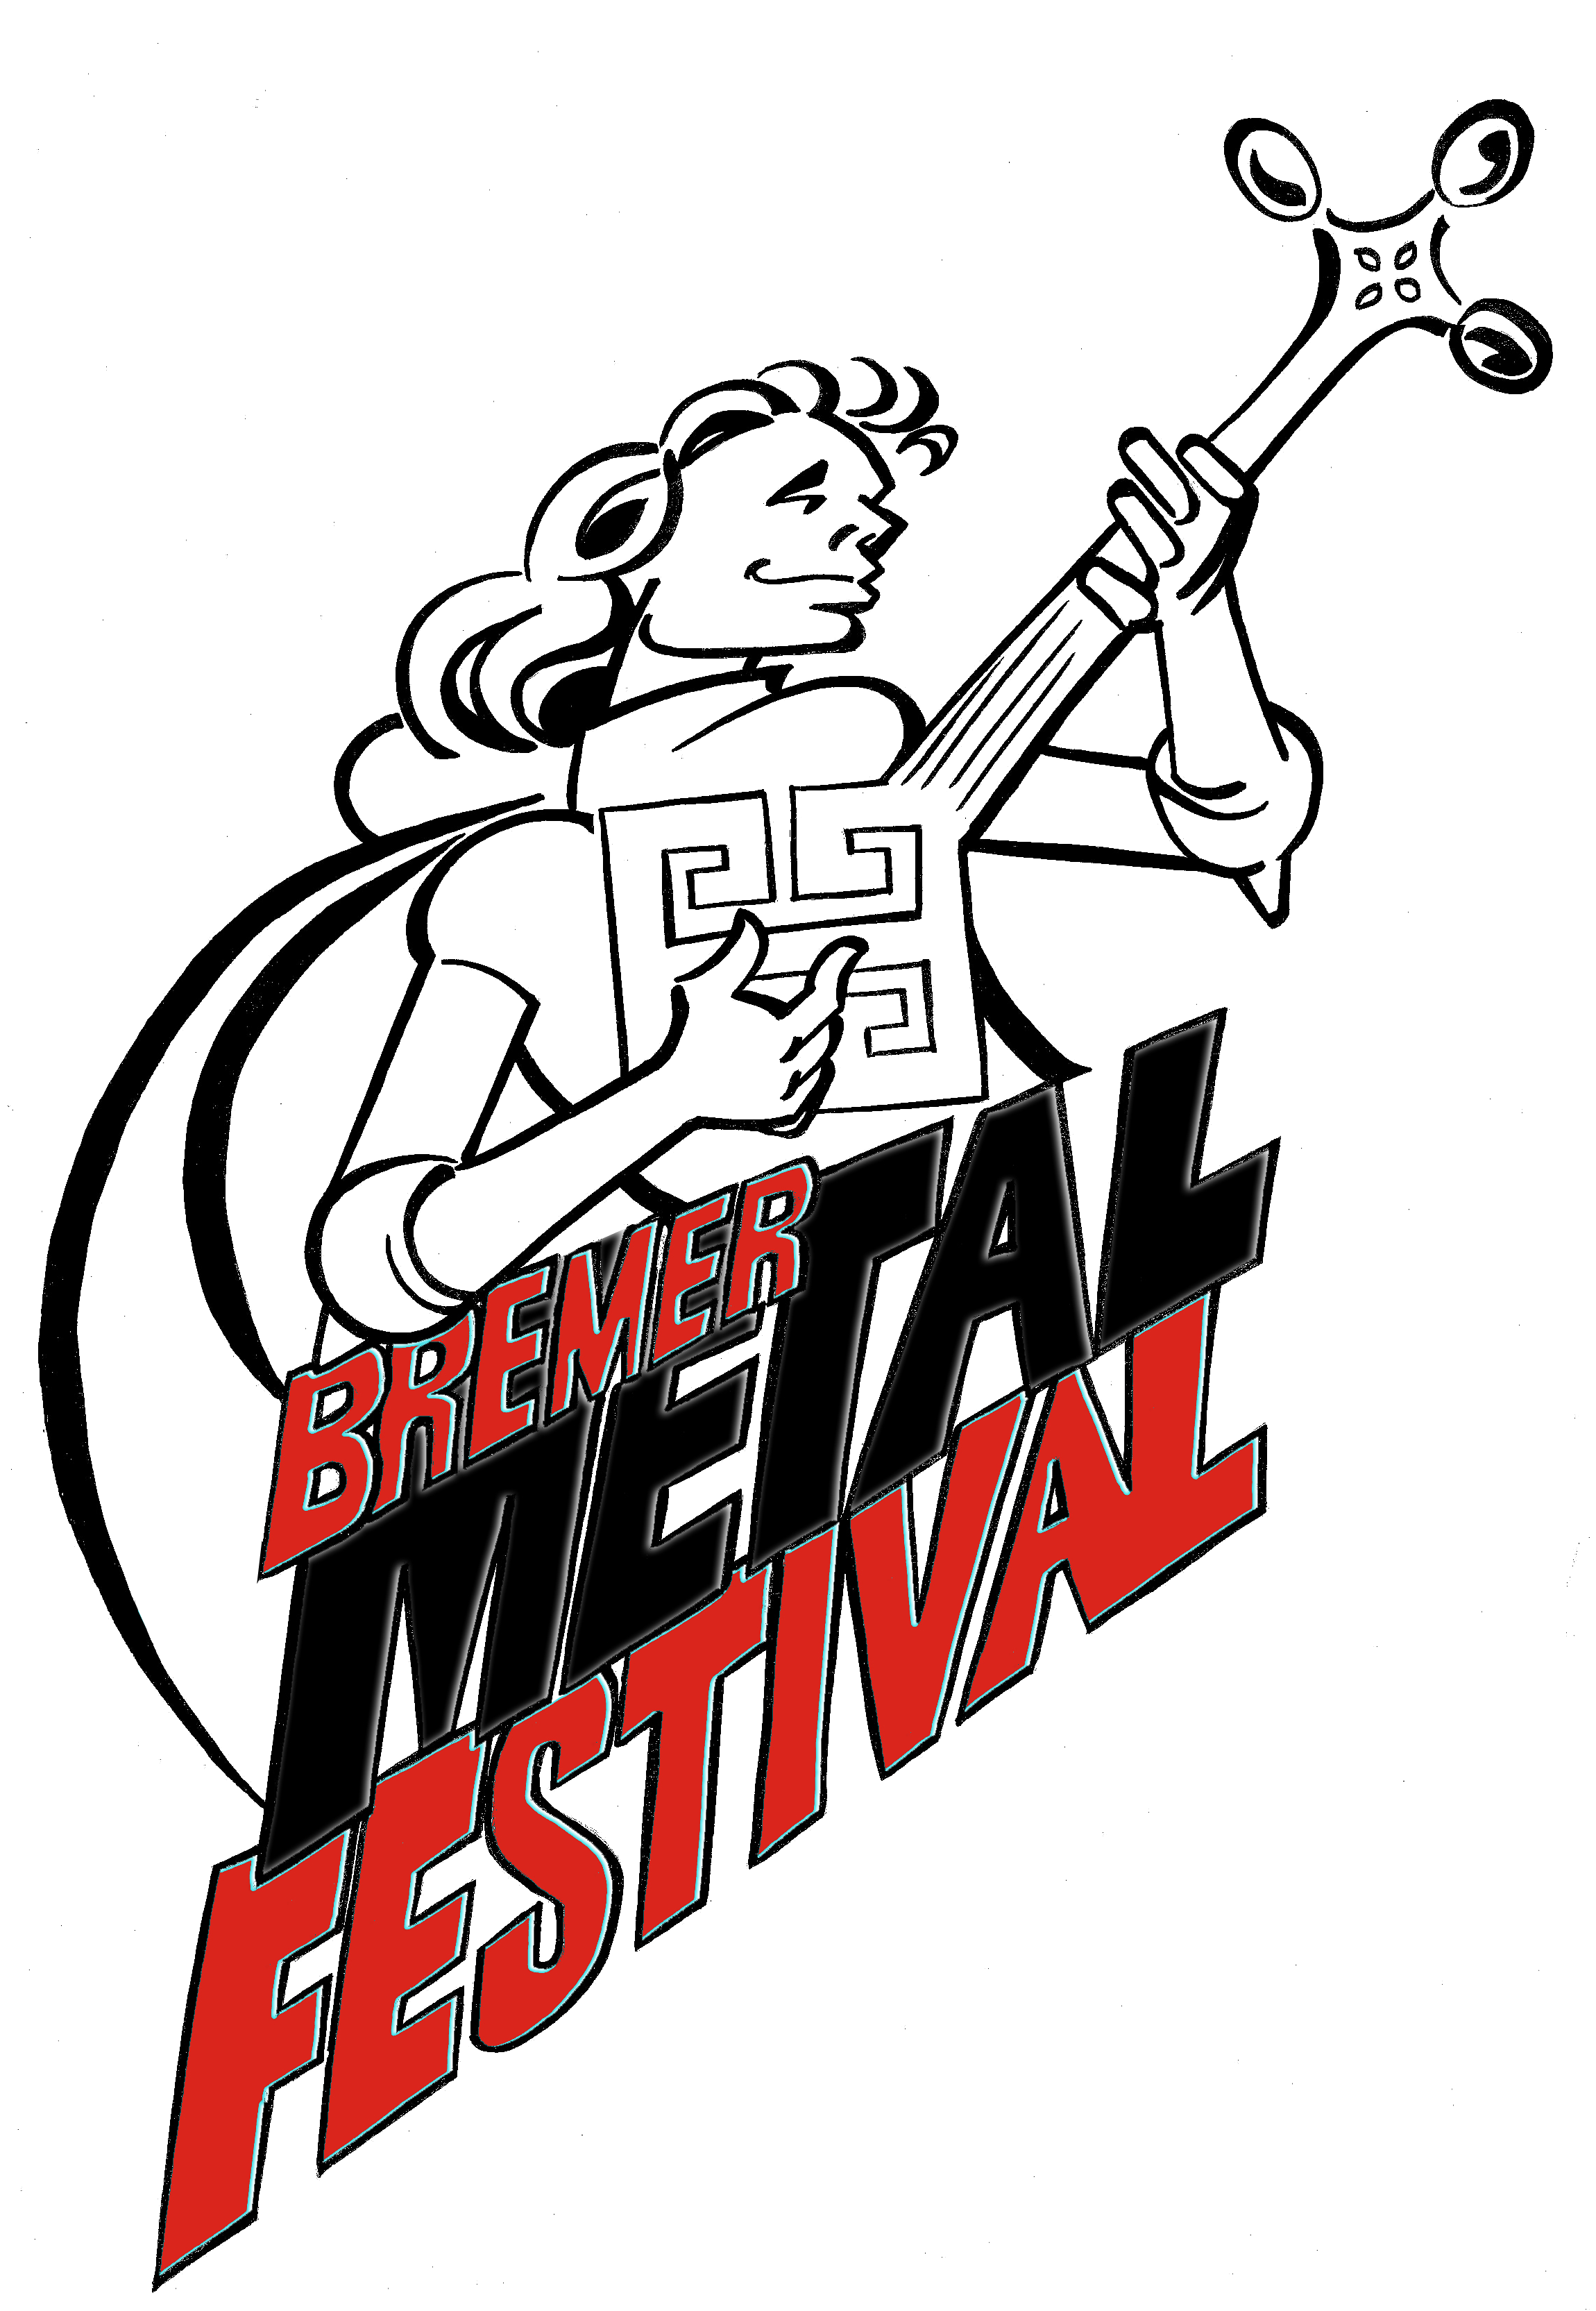 Bremer-Metalfestival